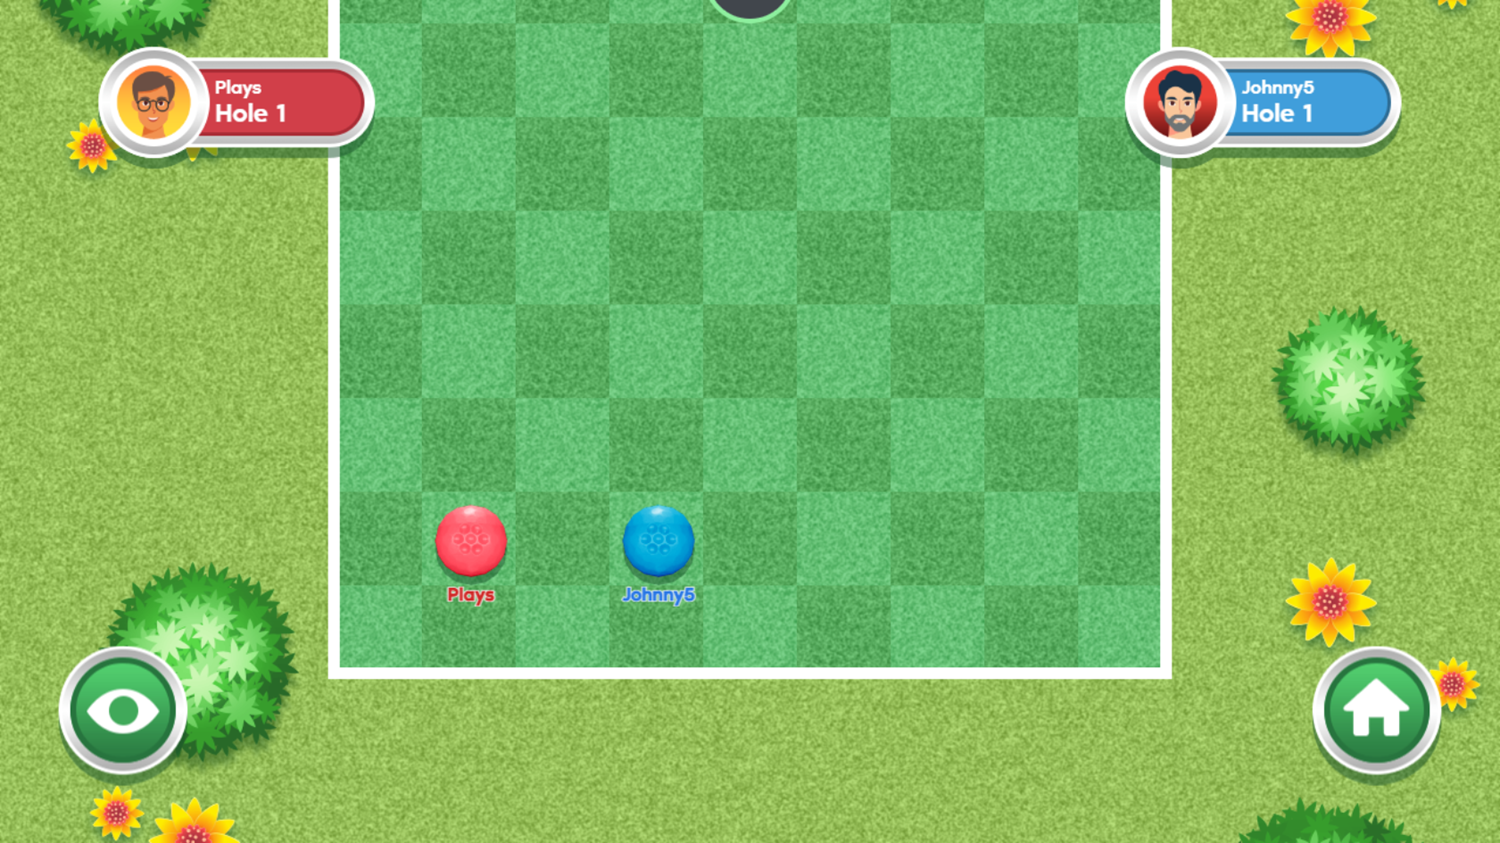 Golf With Buddies Game Start Screenshot.